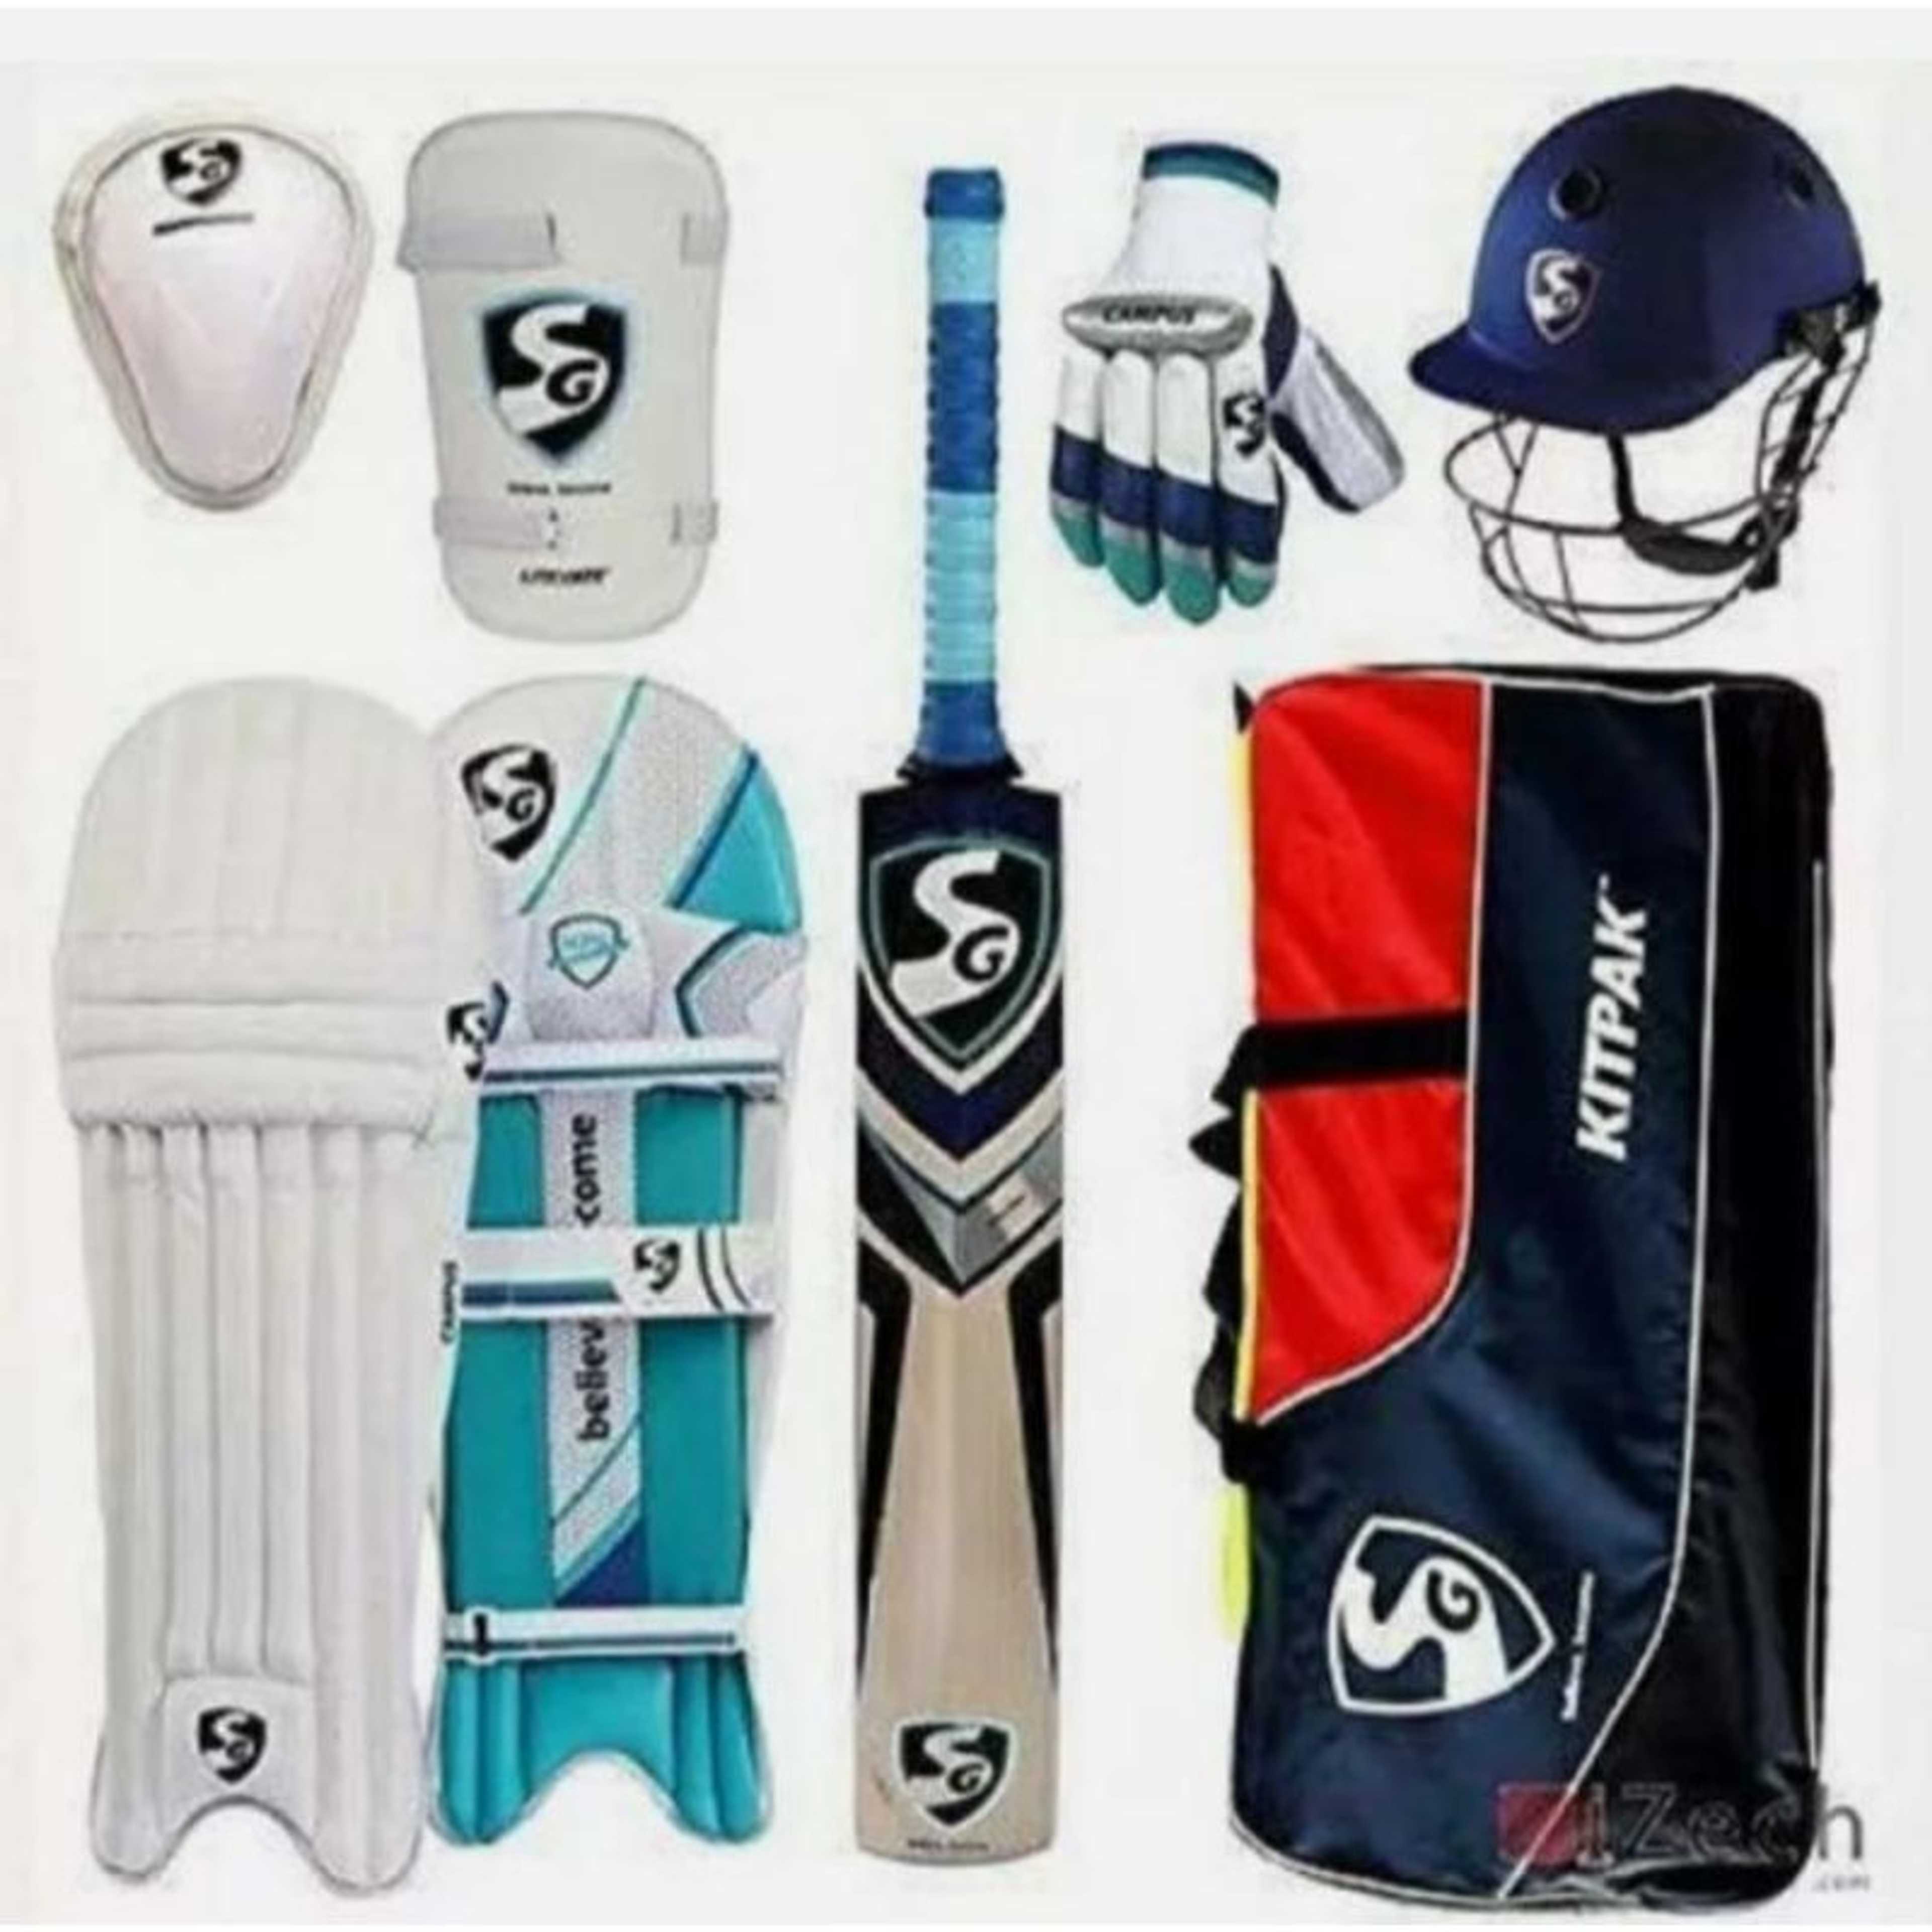 Complete Cricket Kit 100% Original Brand Mid Price Range Complete Batsman Kit